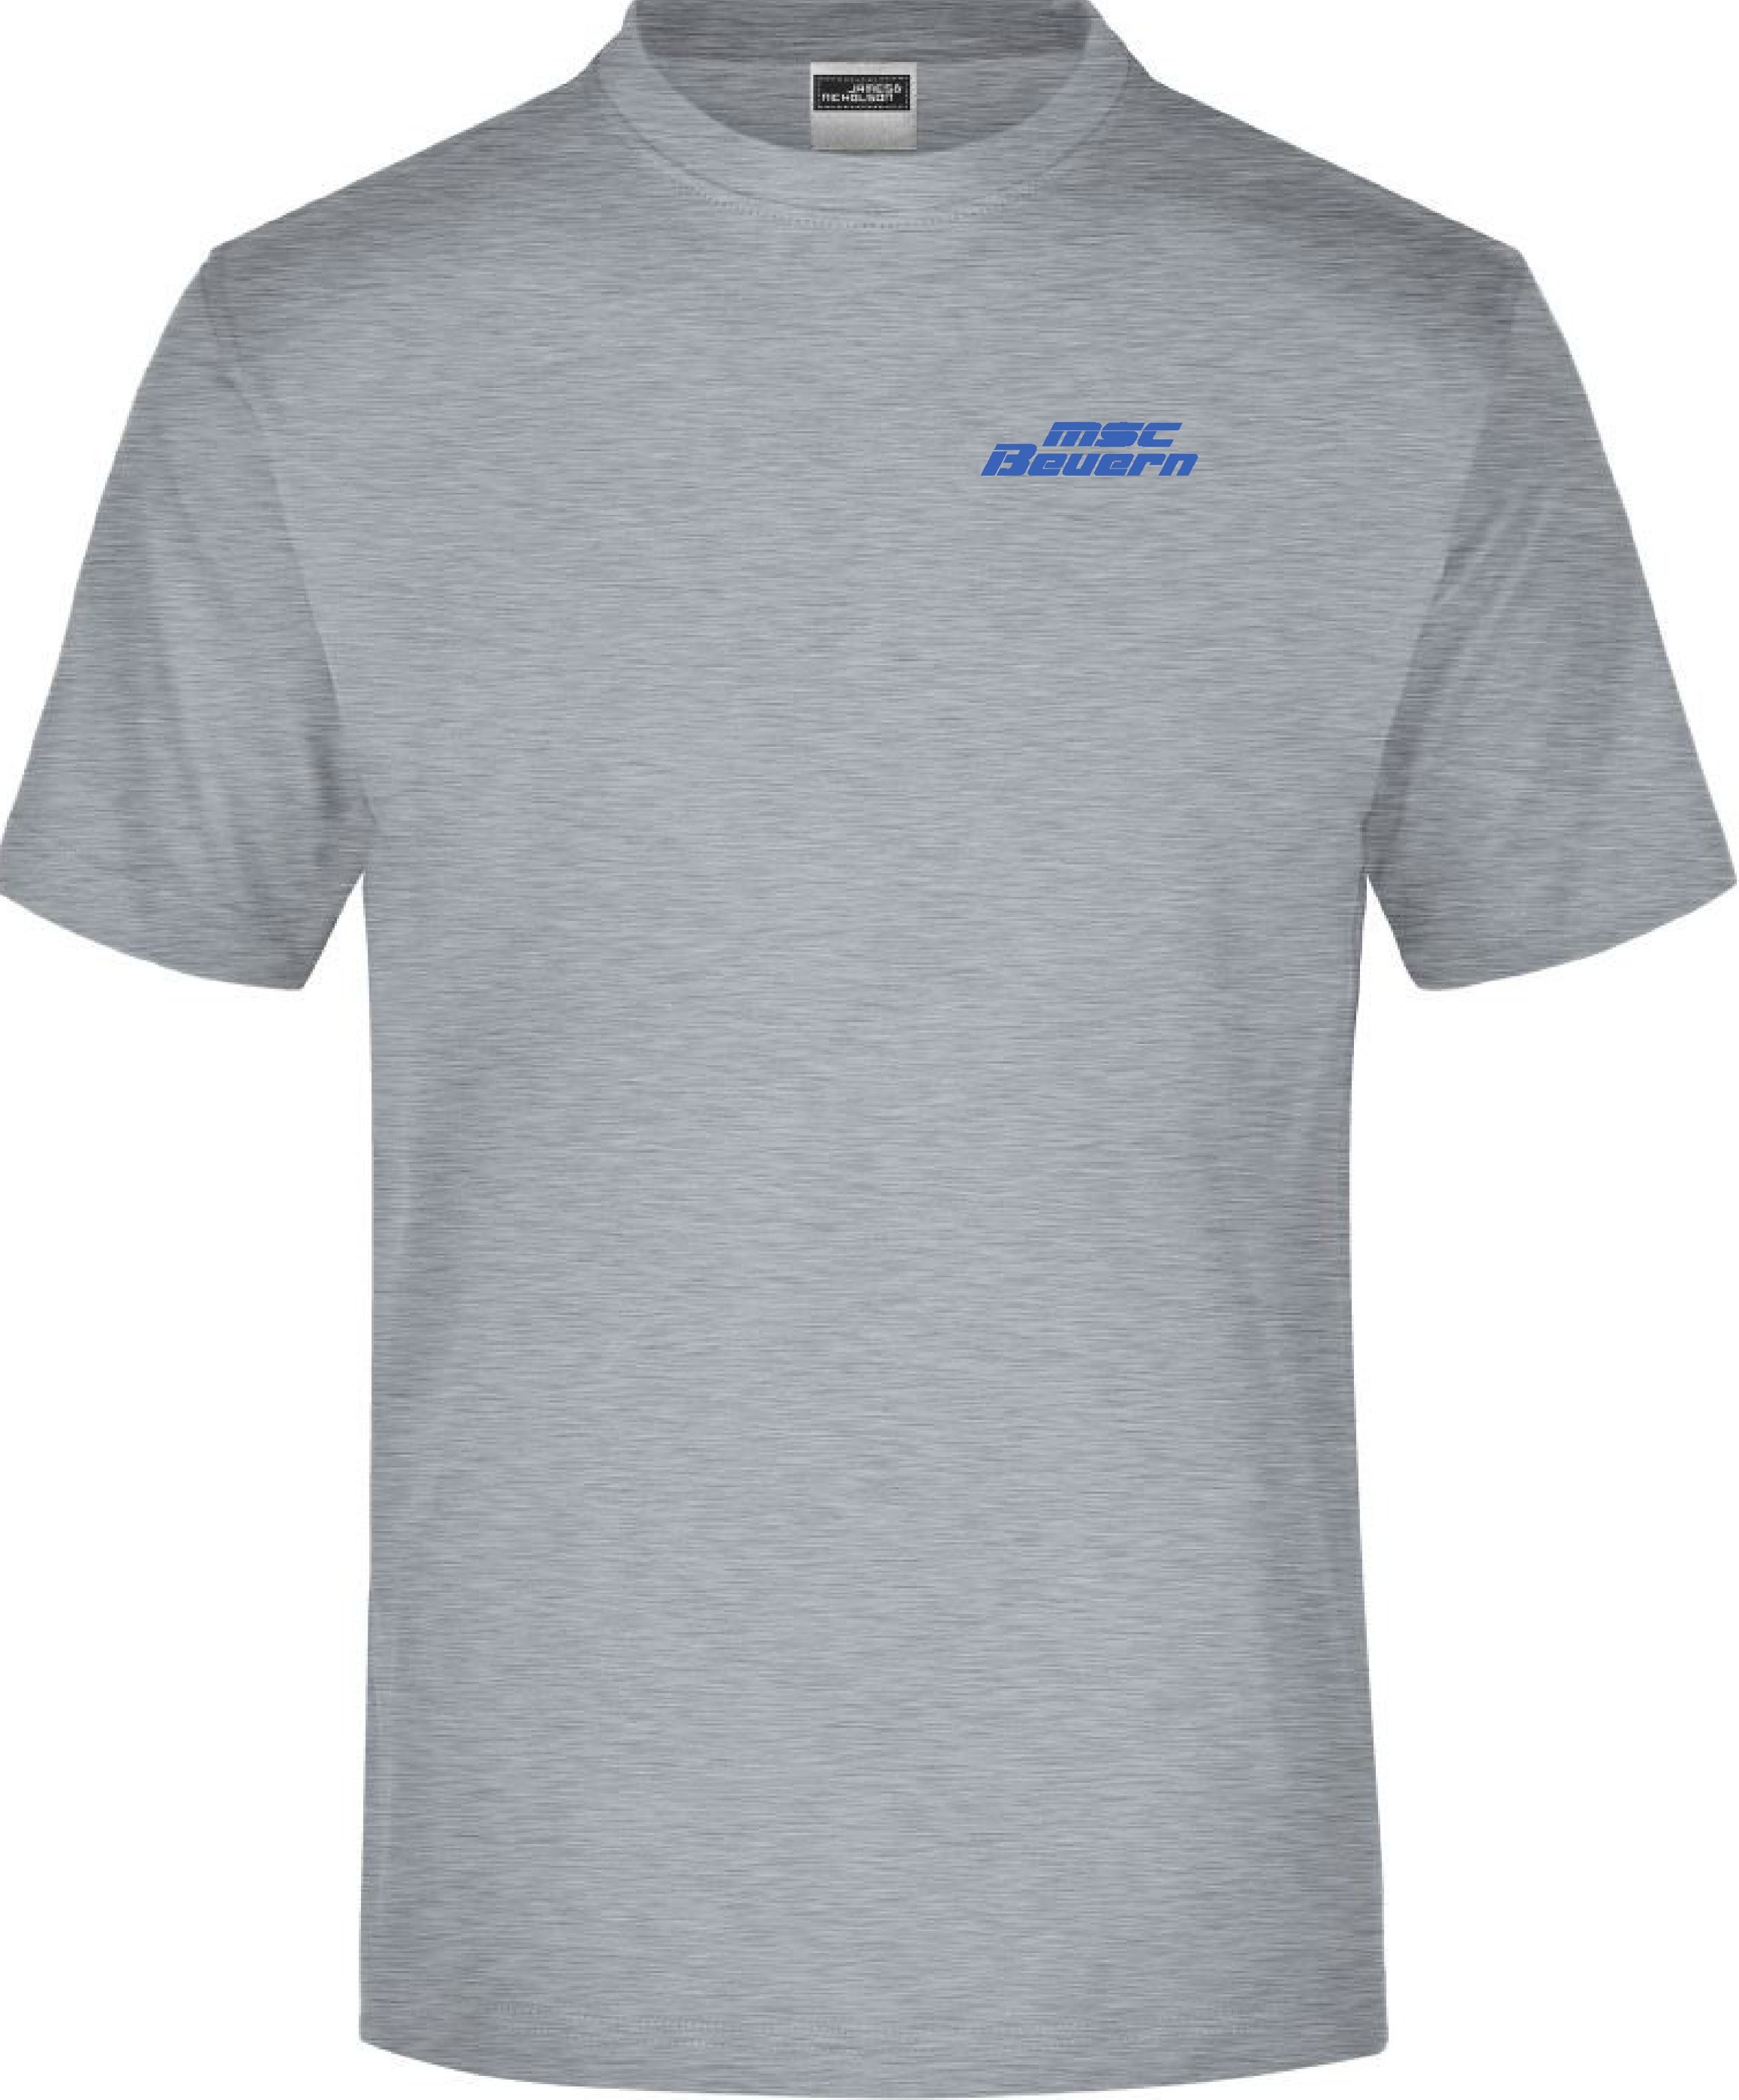 Vereins Baumwoll T-Shirt Basic  MSC Beuern